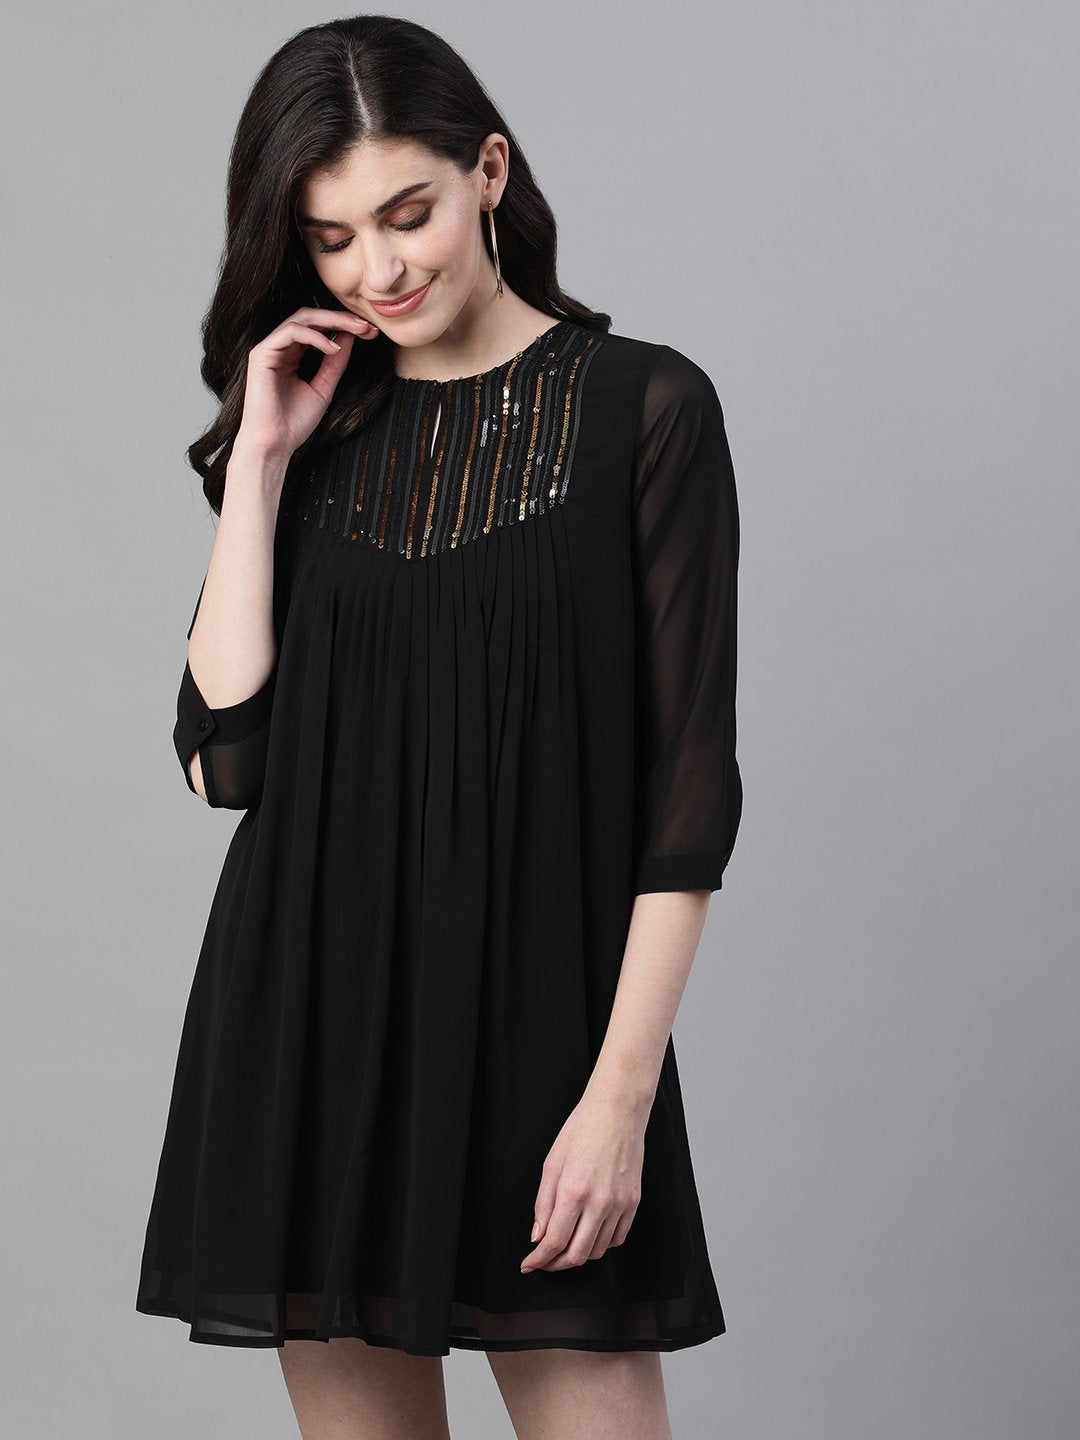 Ishin Women's Poly Georgette Black Embellished A-Line Dress